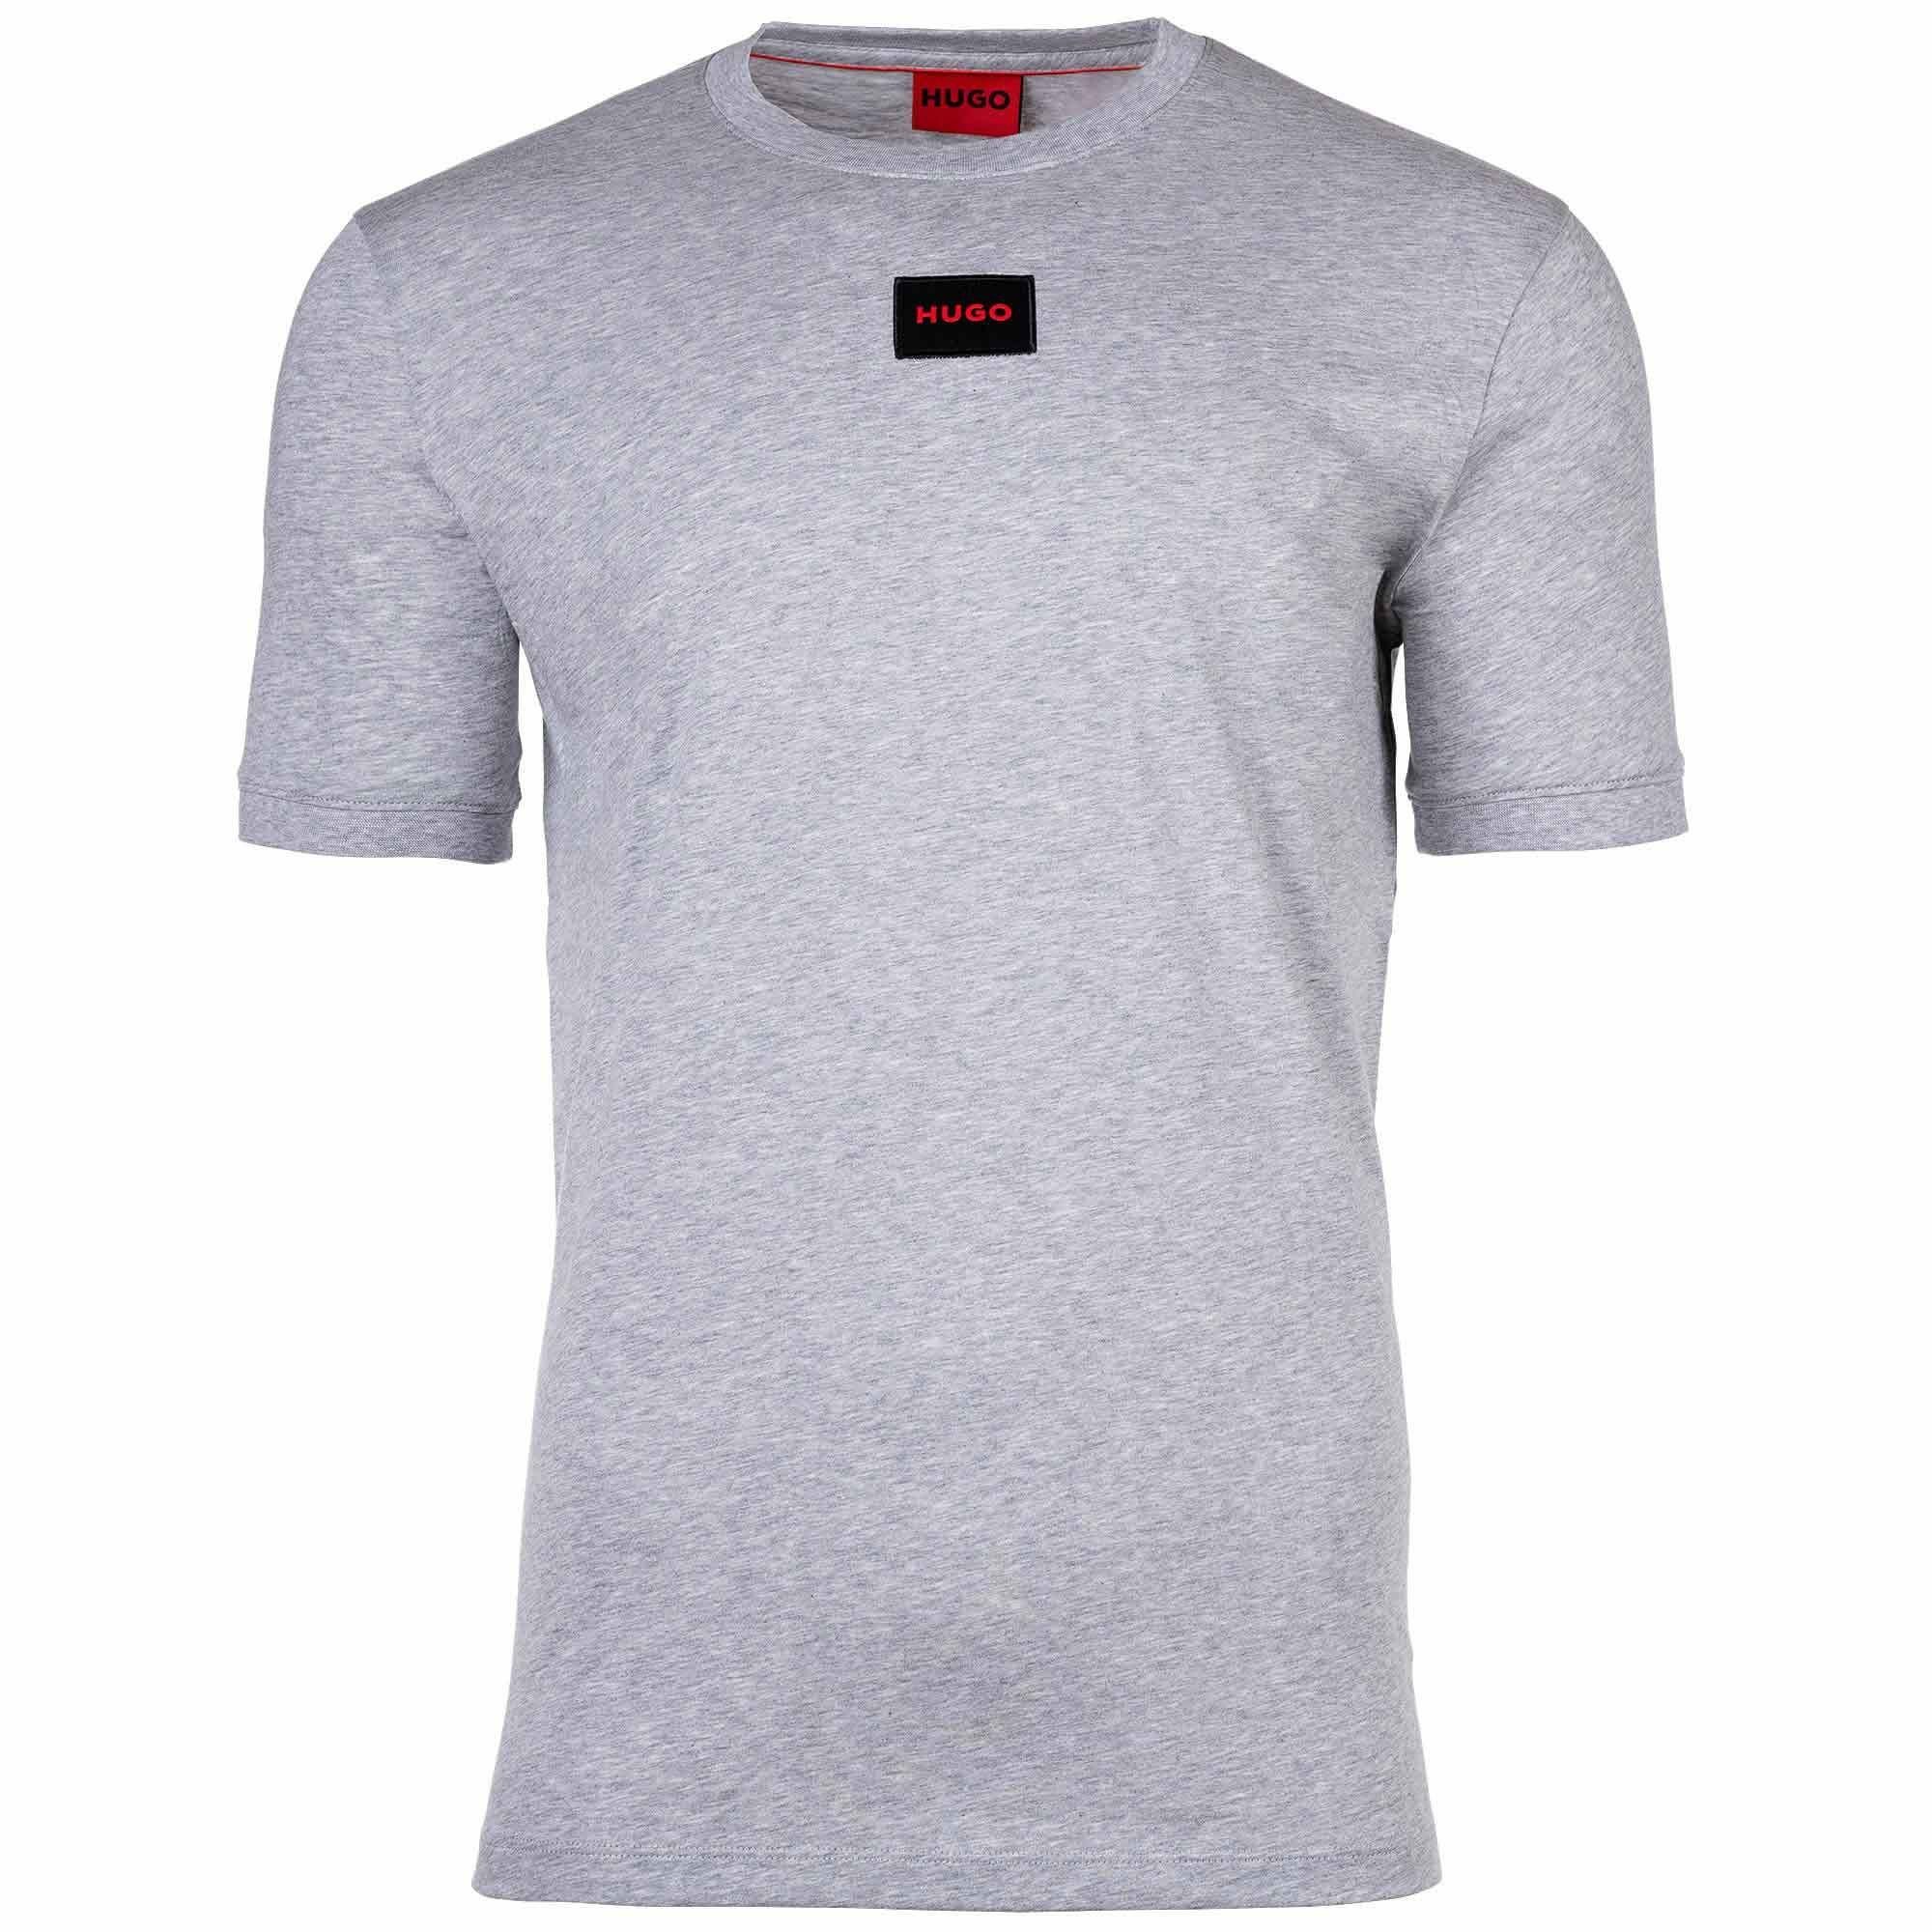 HUGO T-Shirt Herren T-Shirt - Diragolino212 Rundhals Grau (Open Grey)